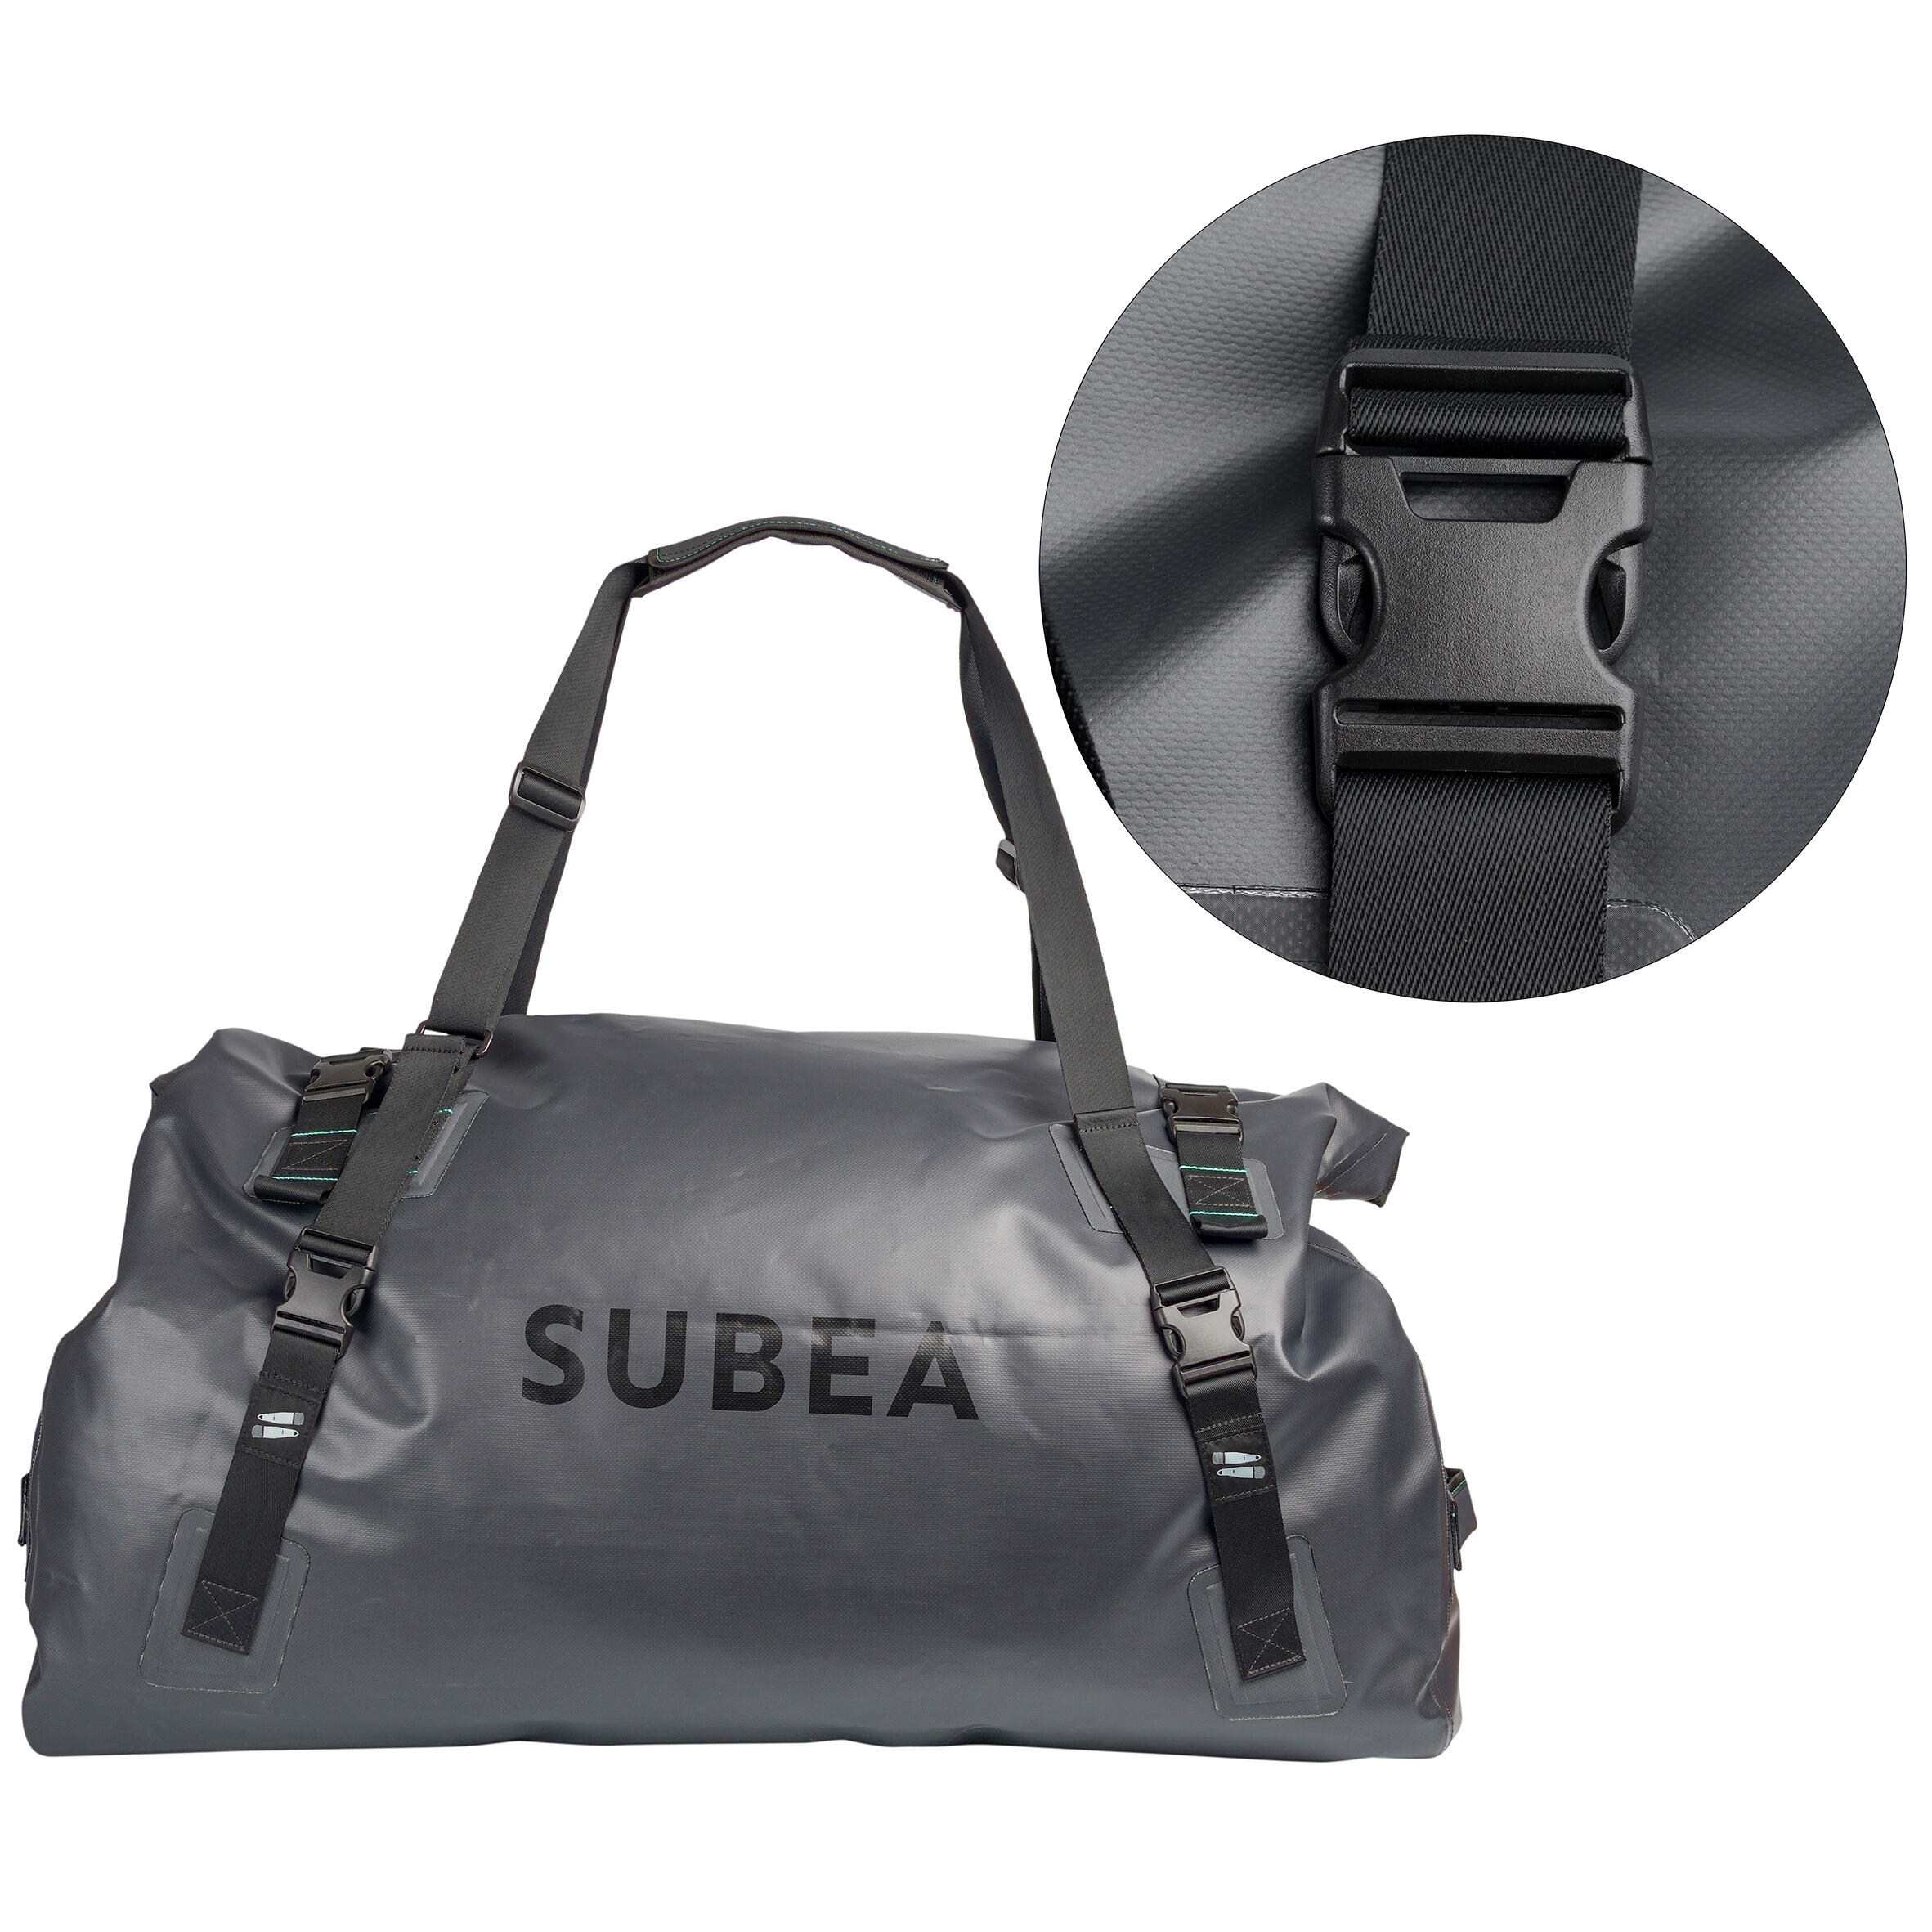 Diving bag watertight IPX6 100 L black grey 6/8